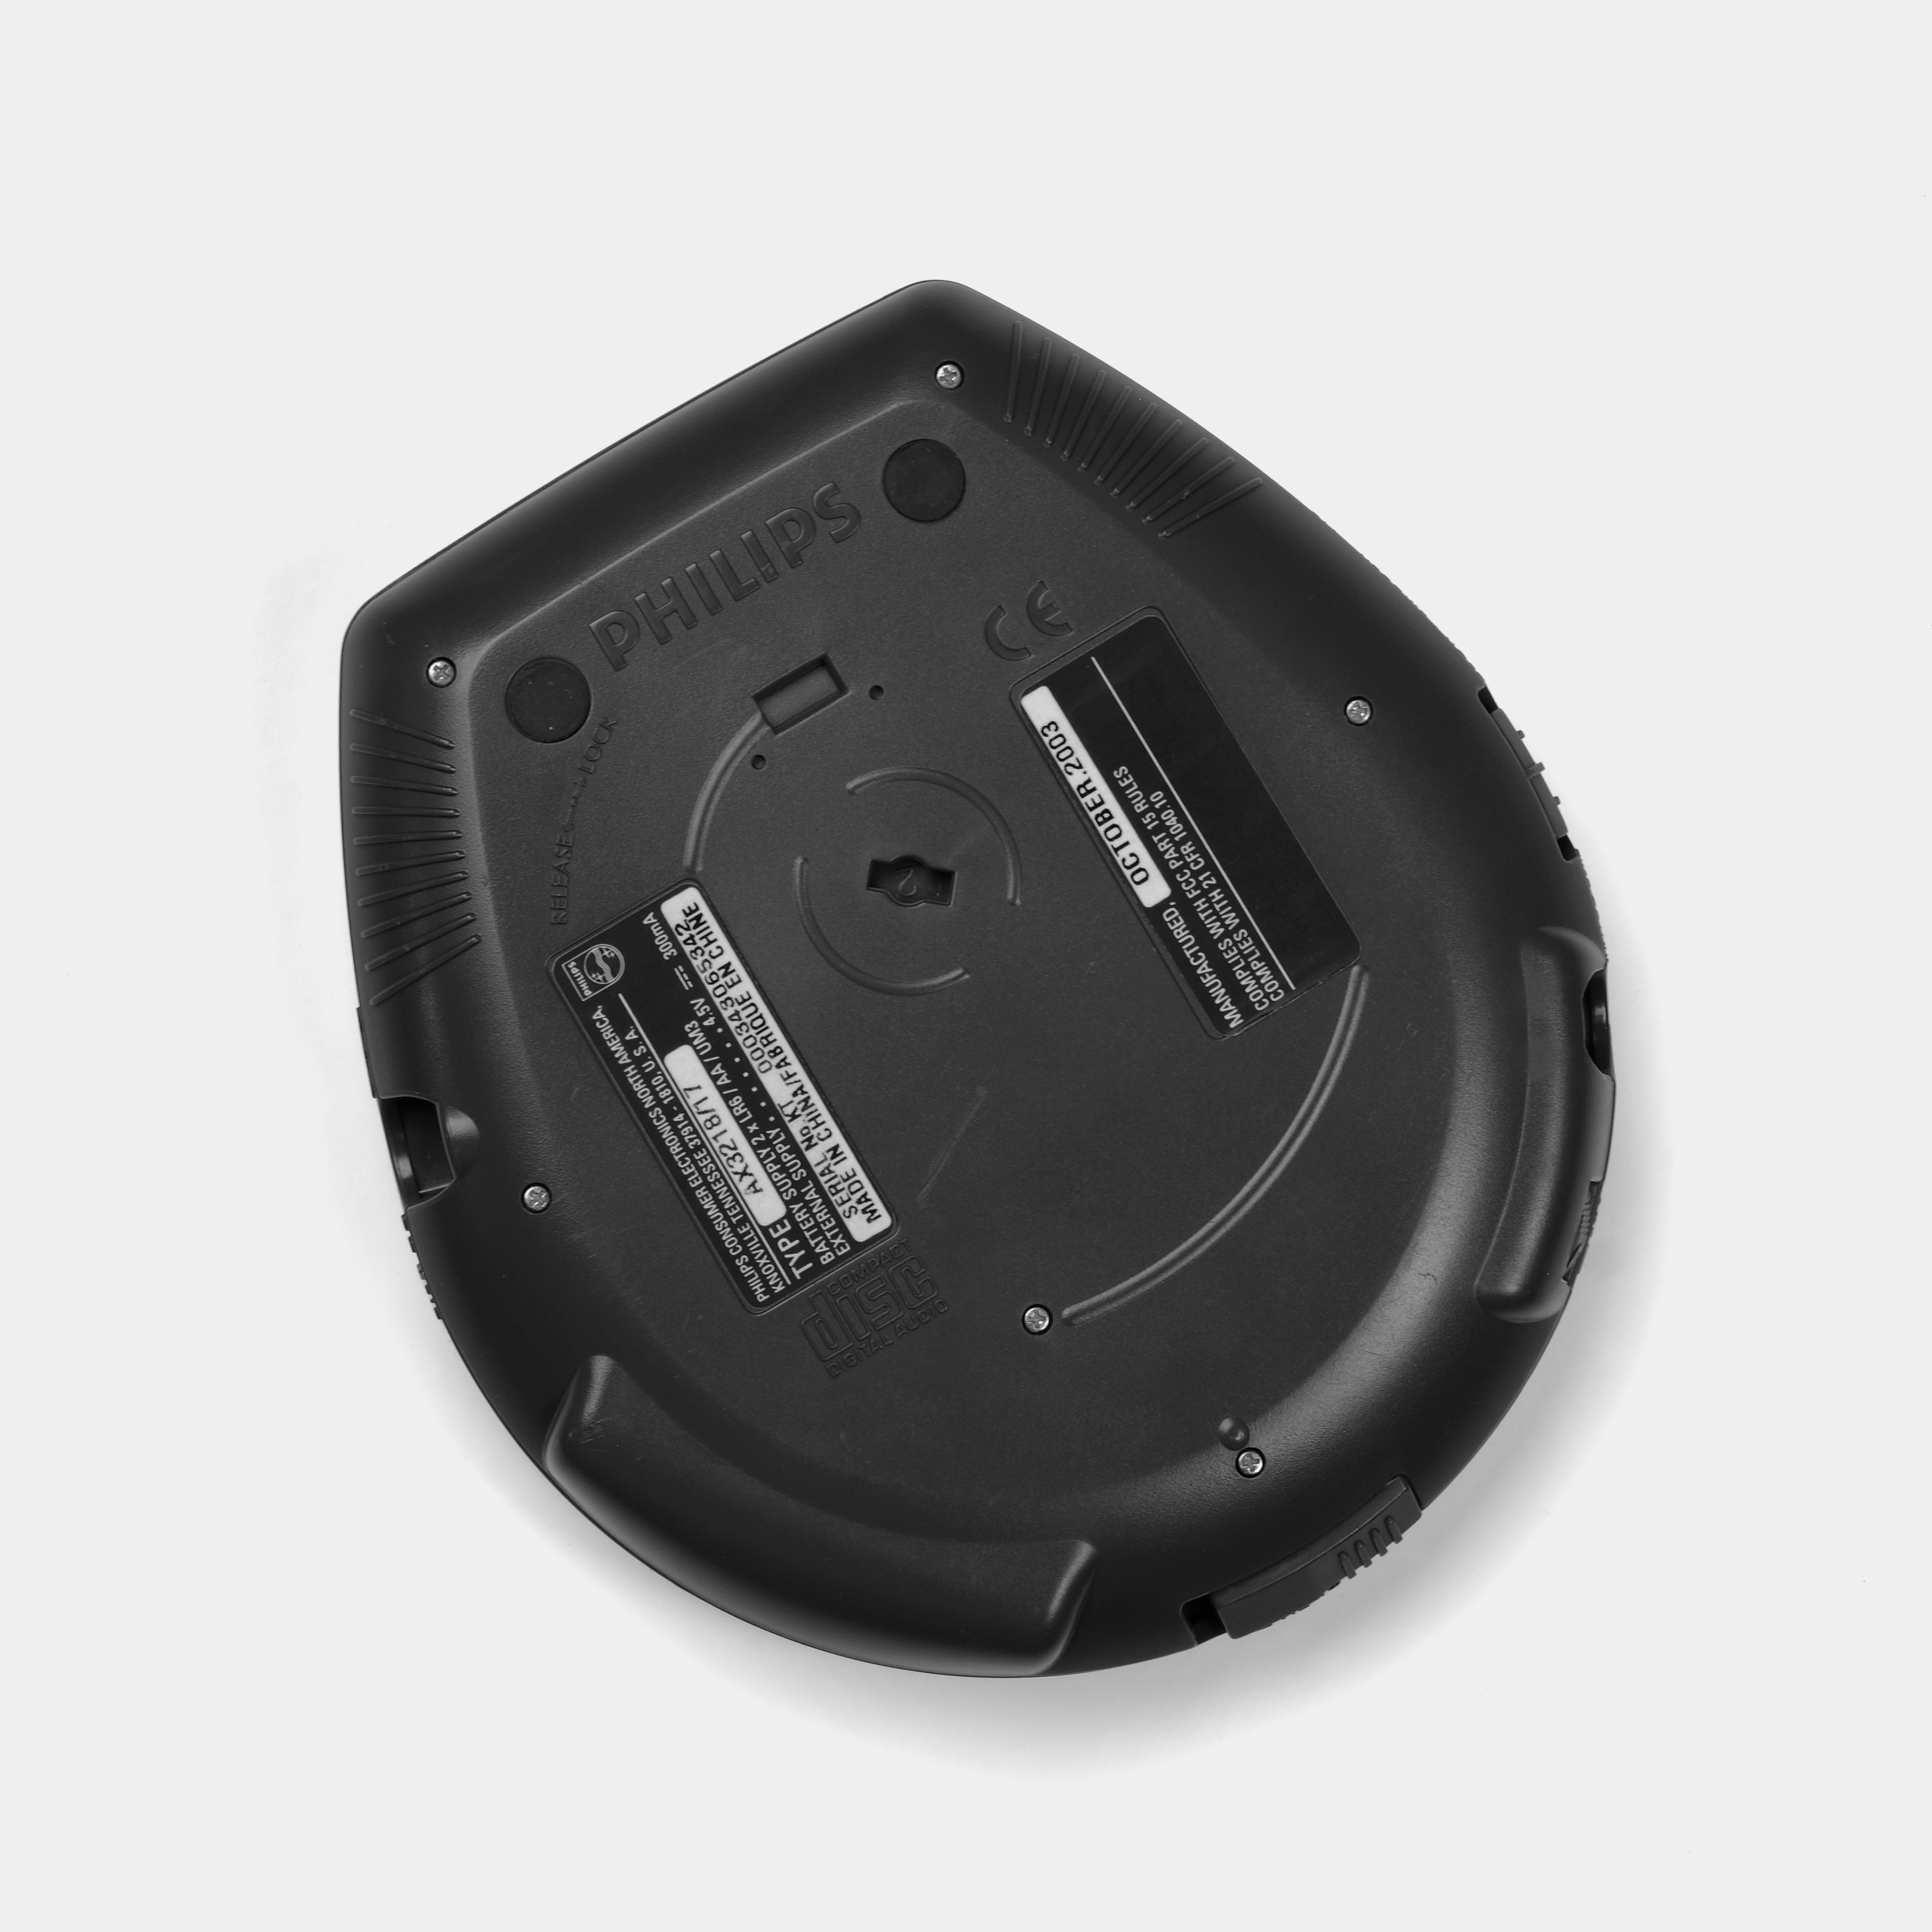 Philips Jogproof AX3218/17 Portable CD Player